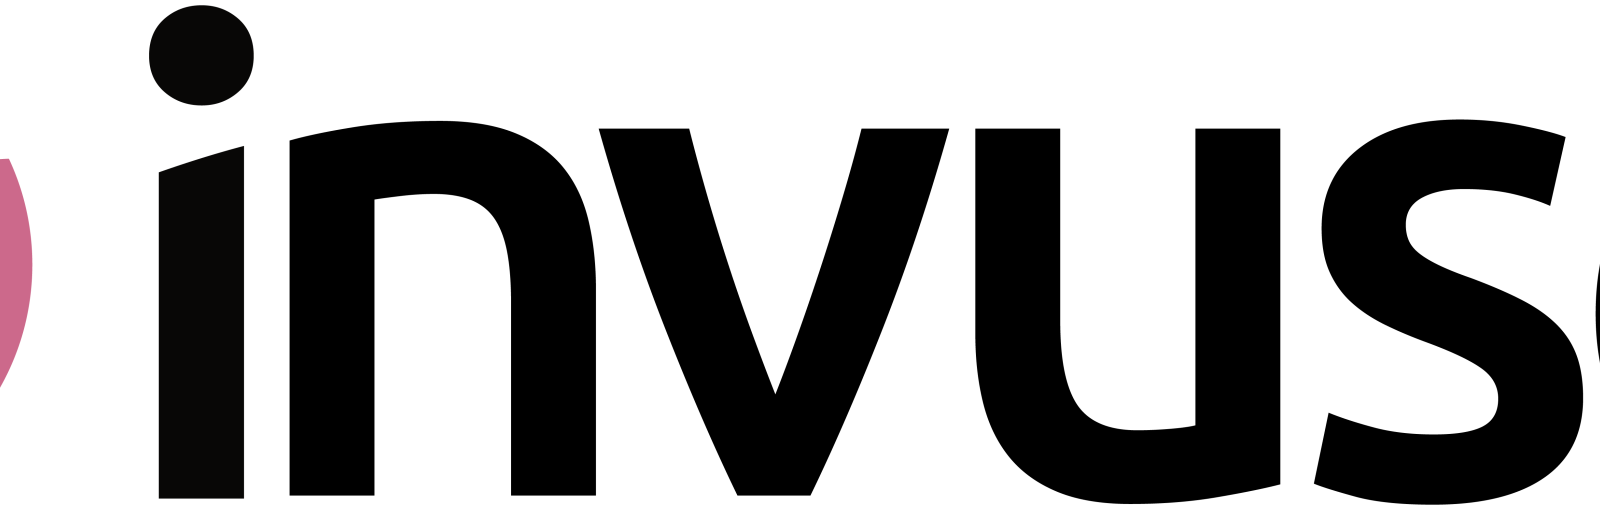 Invuse logo